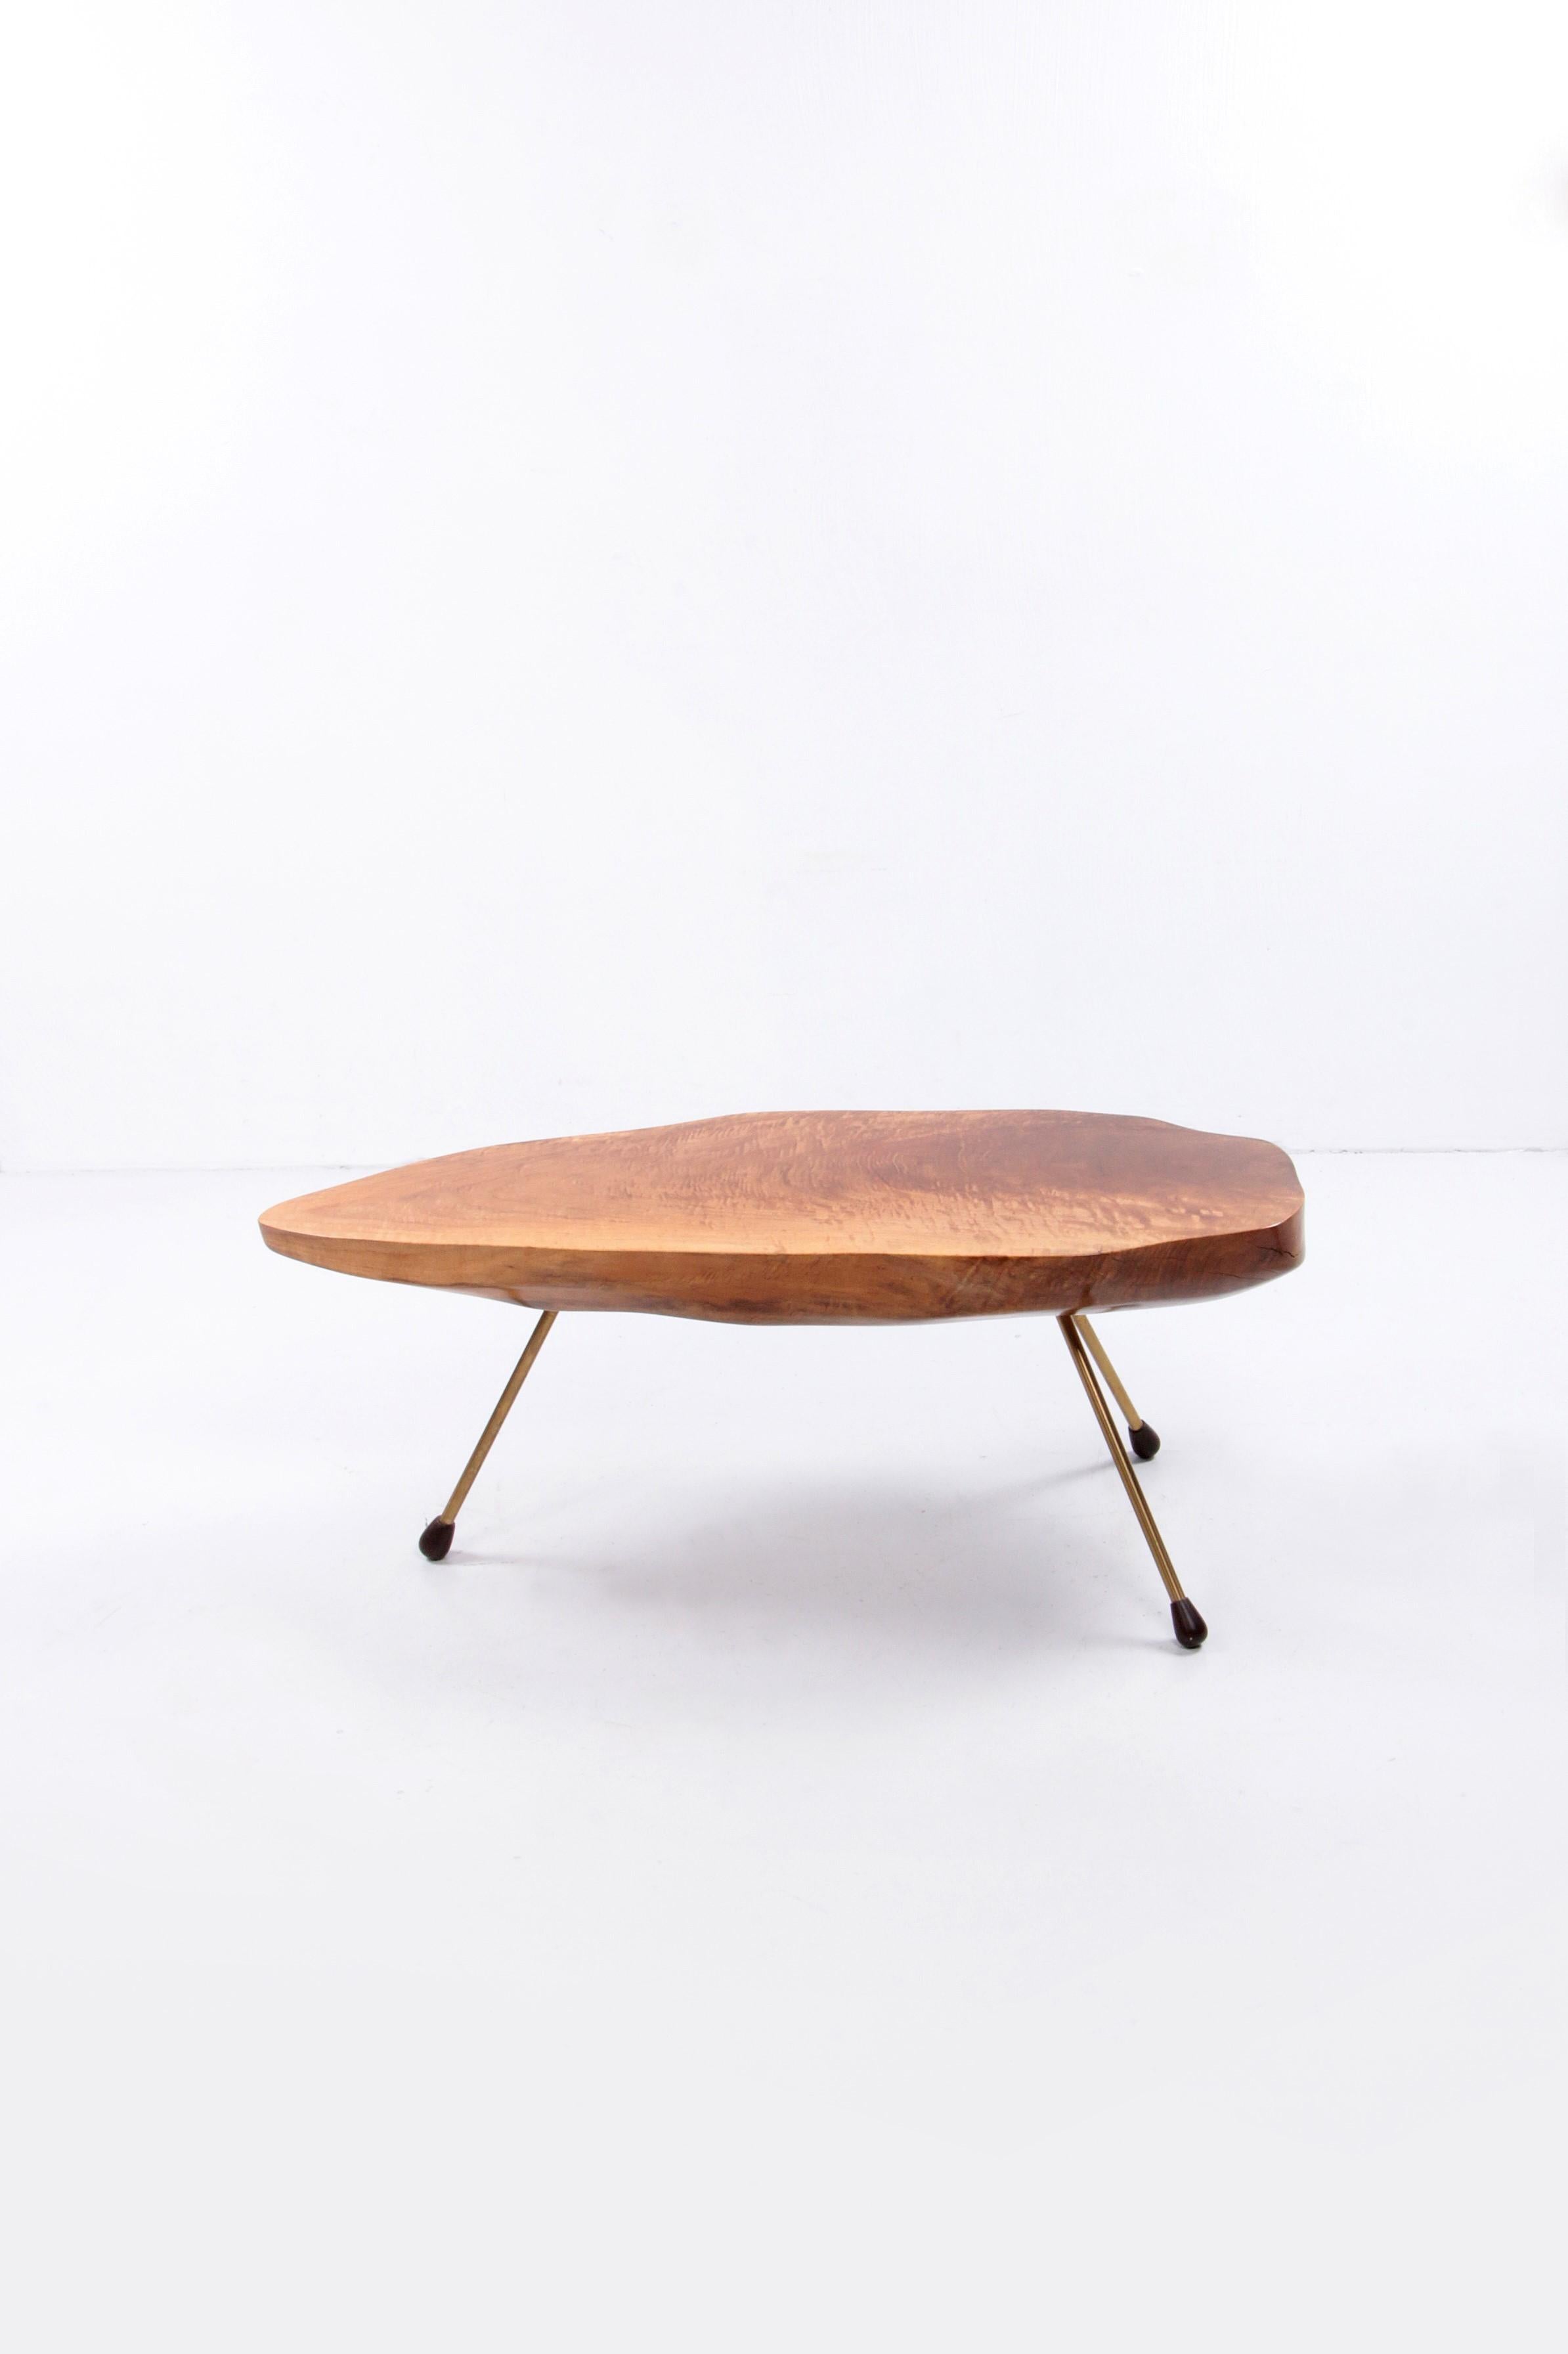 20th Century Carl Aubock Design Coffee Table Walnut with Copper Legs, 1950s Austria For Sale